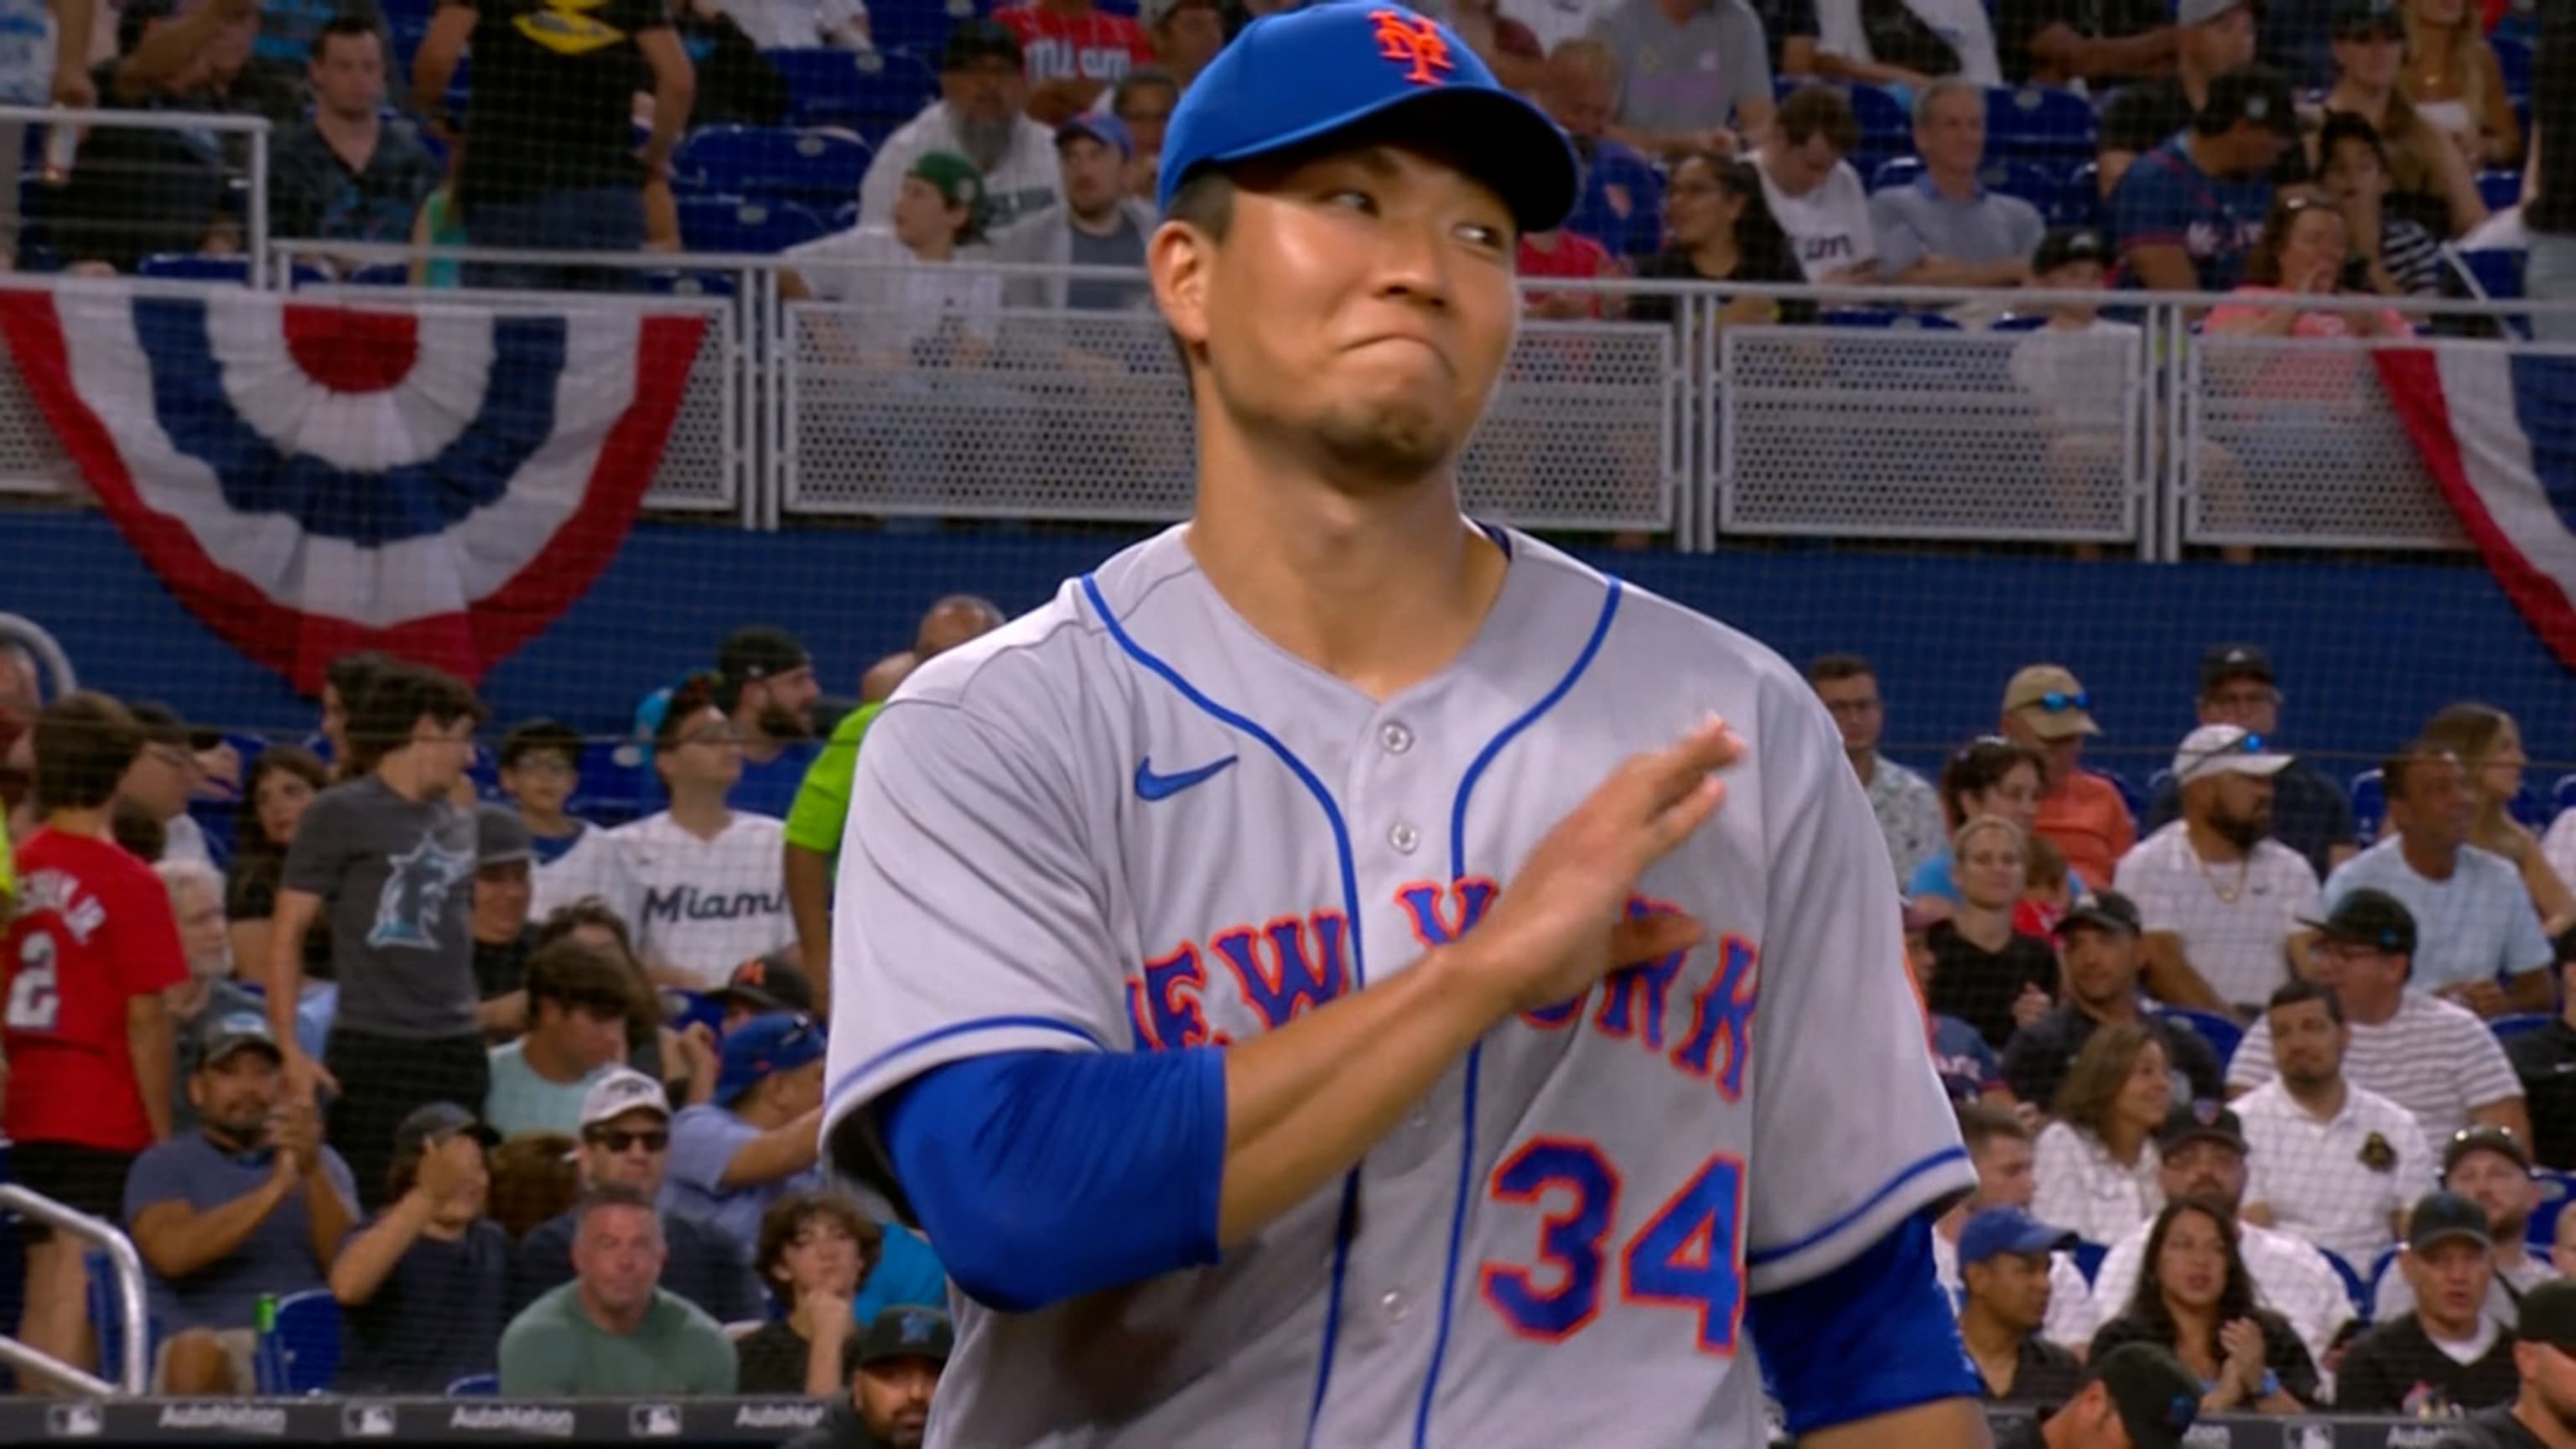 New York Mets - What a debut for Kodai Senga! 👏